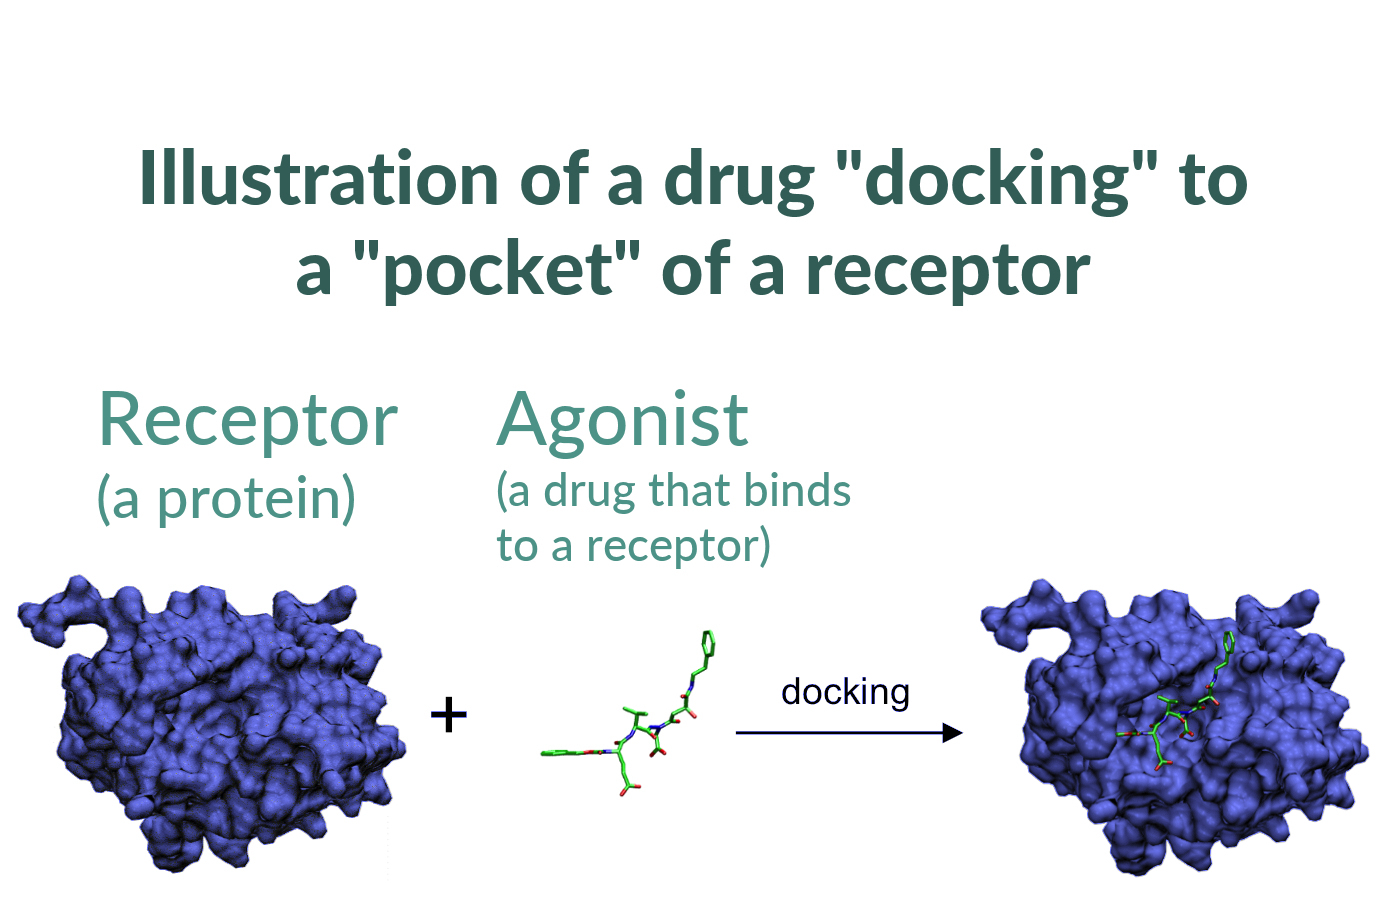 Illustration of a drug binding (docking) to a receptor